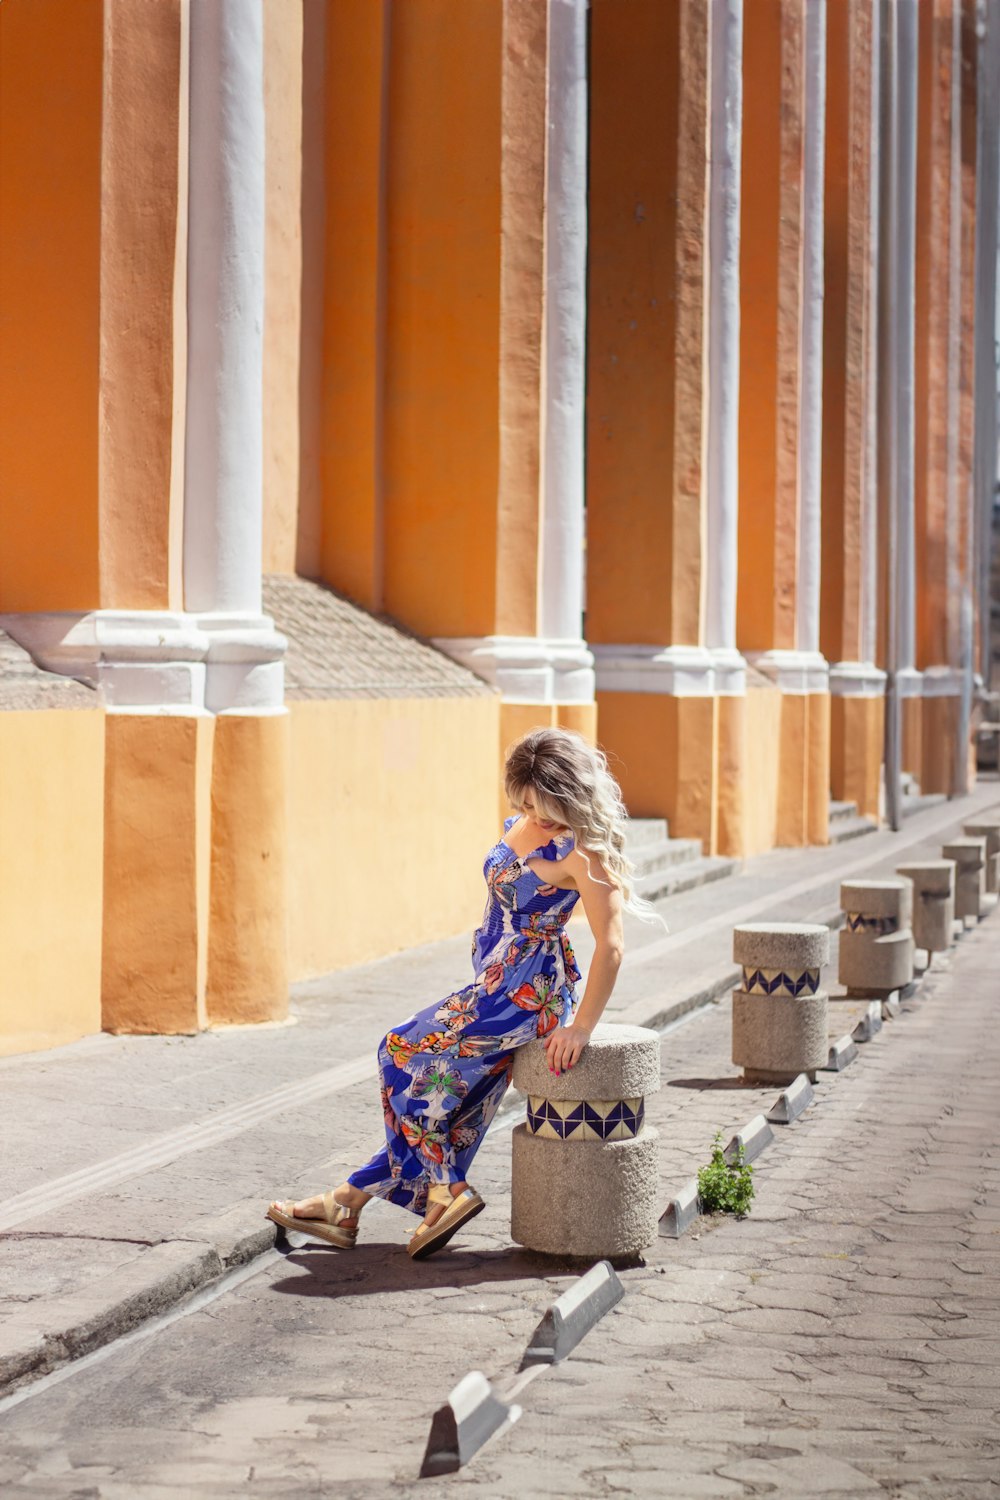 a woman in a blue dress is sitting on a pillar